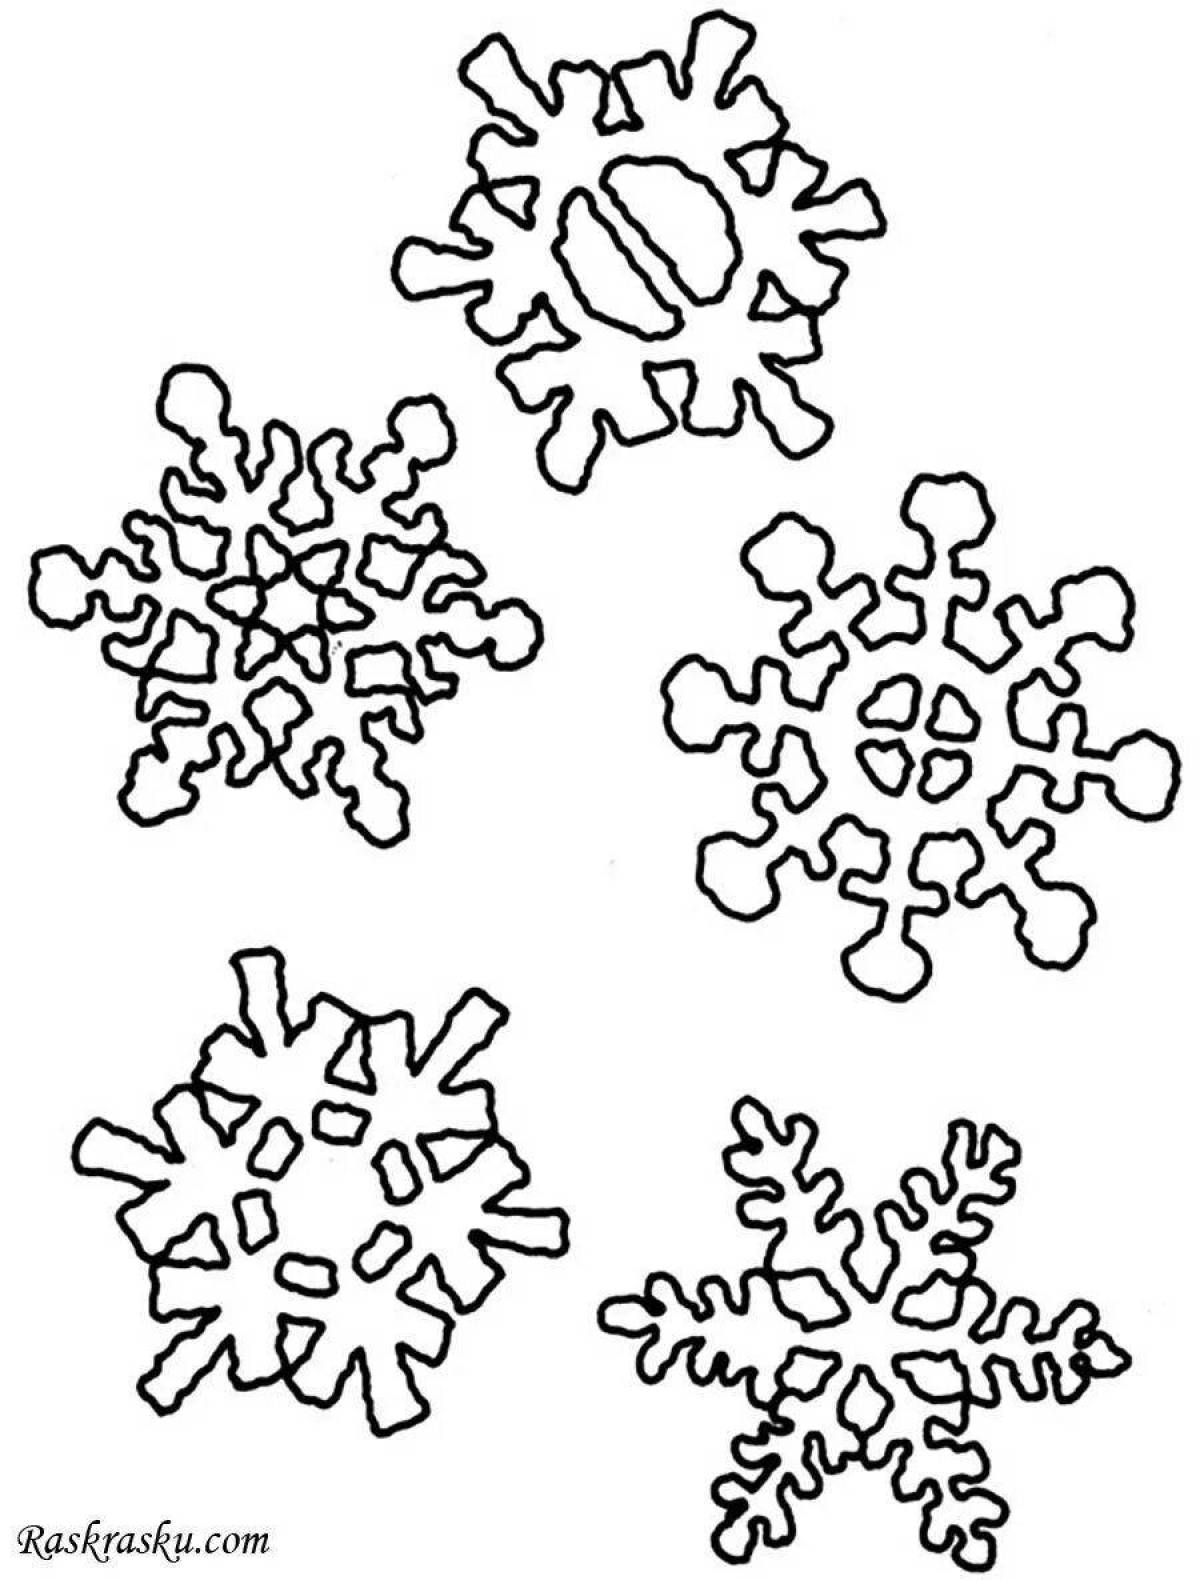 Gorgeous snowflake coloring